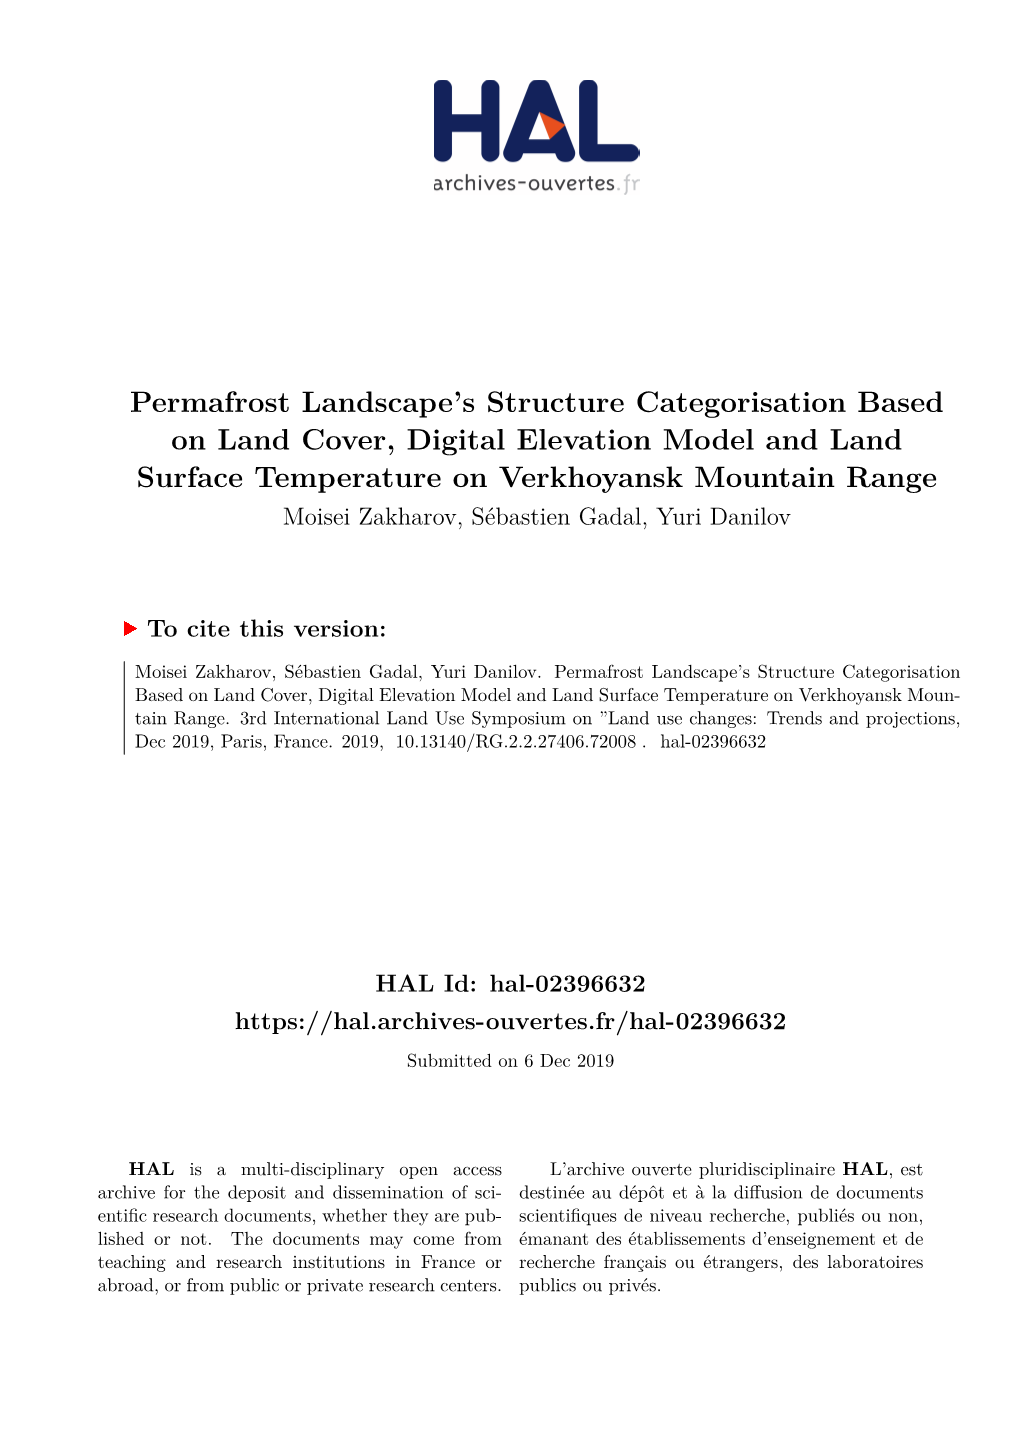 Permafrost Landscape's Structure Categorisation Based on Land